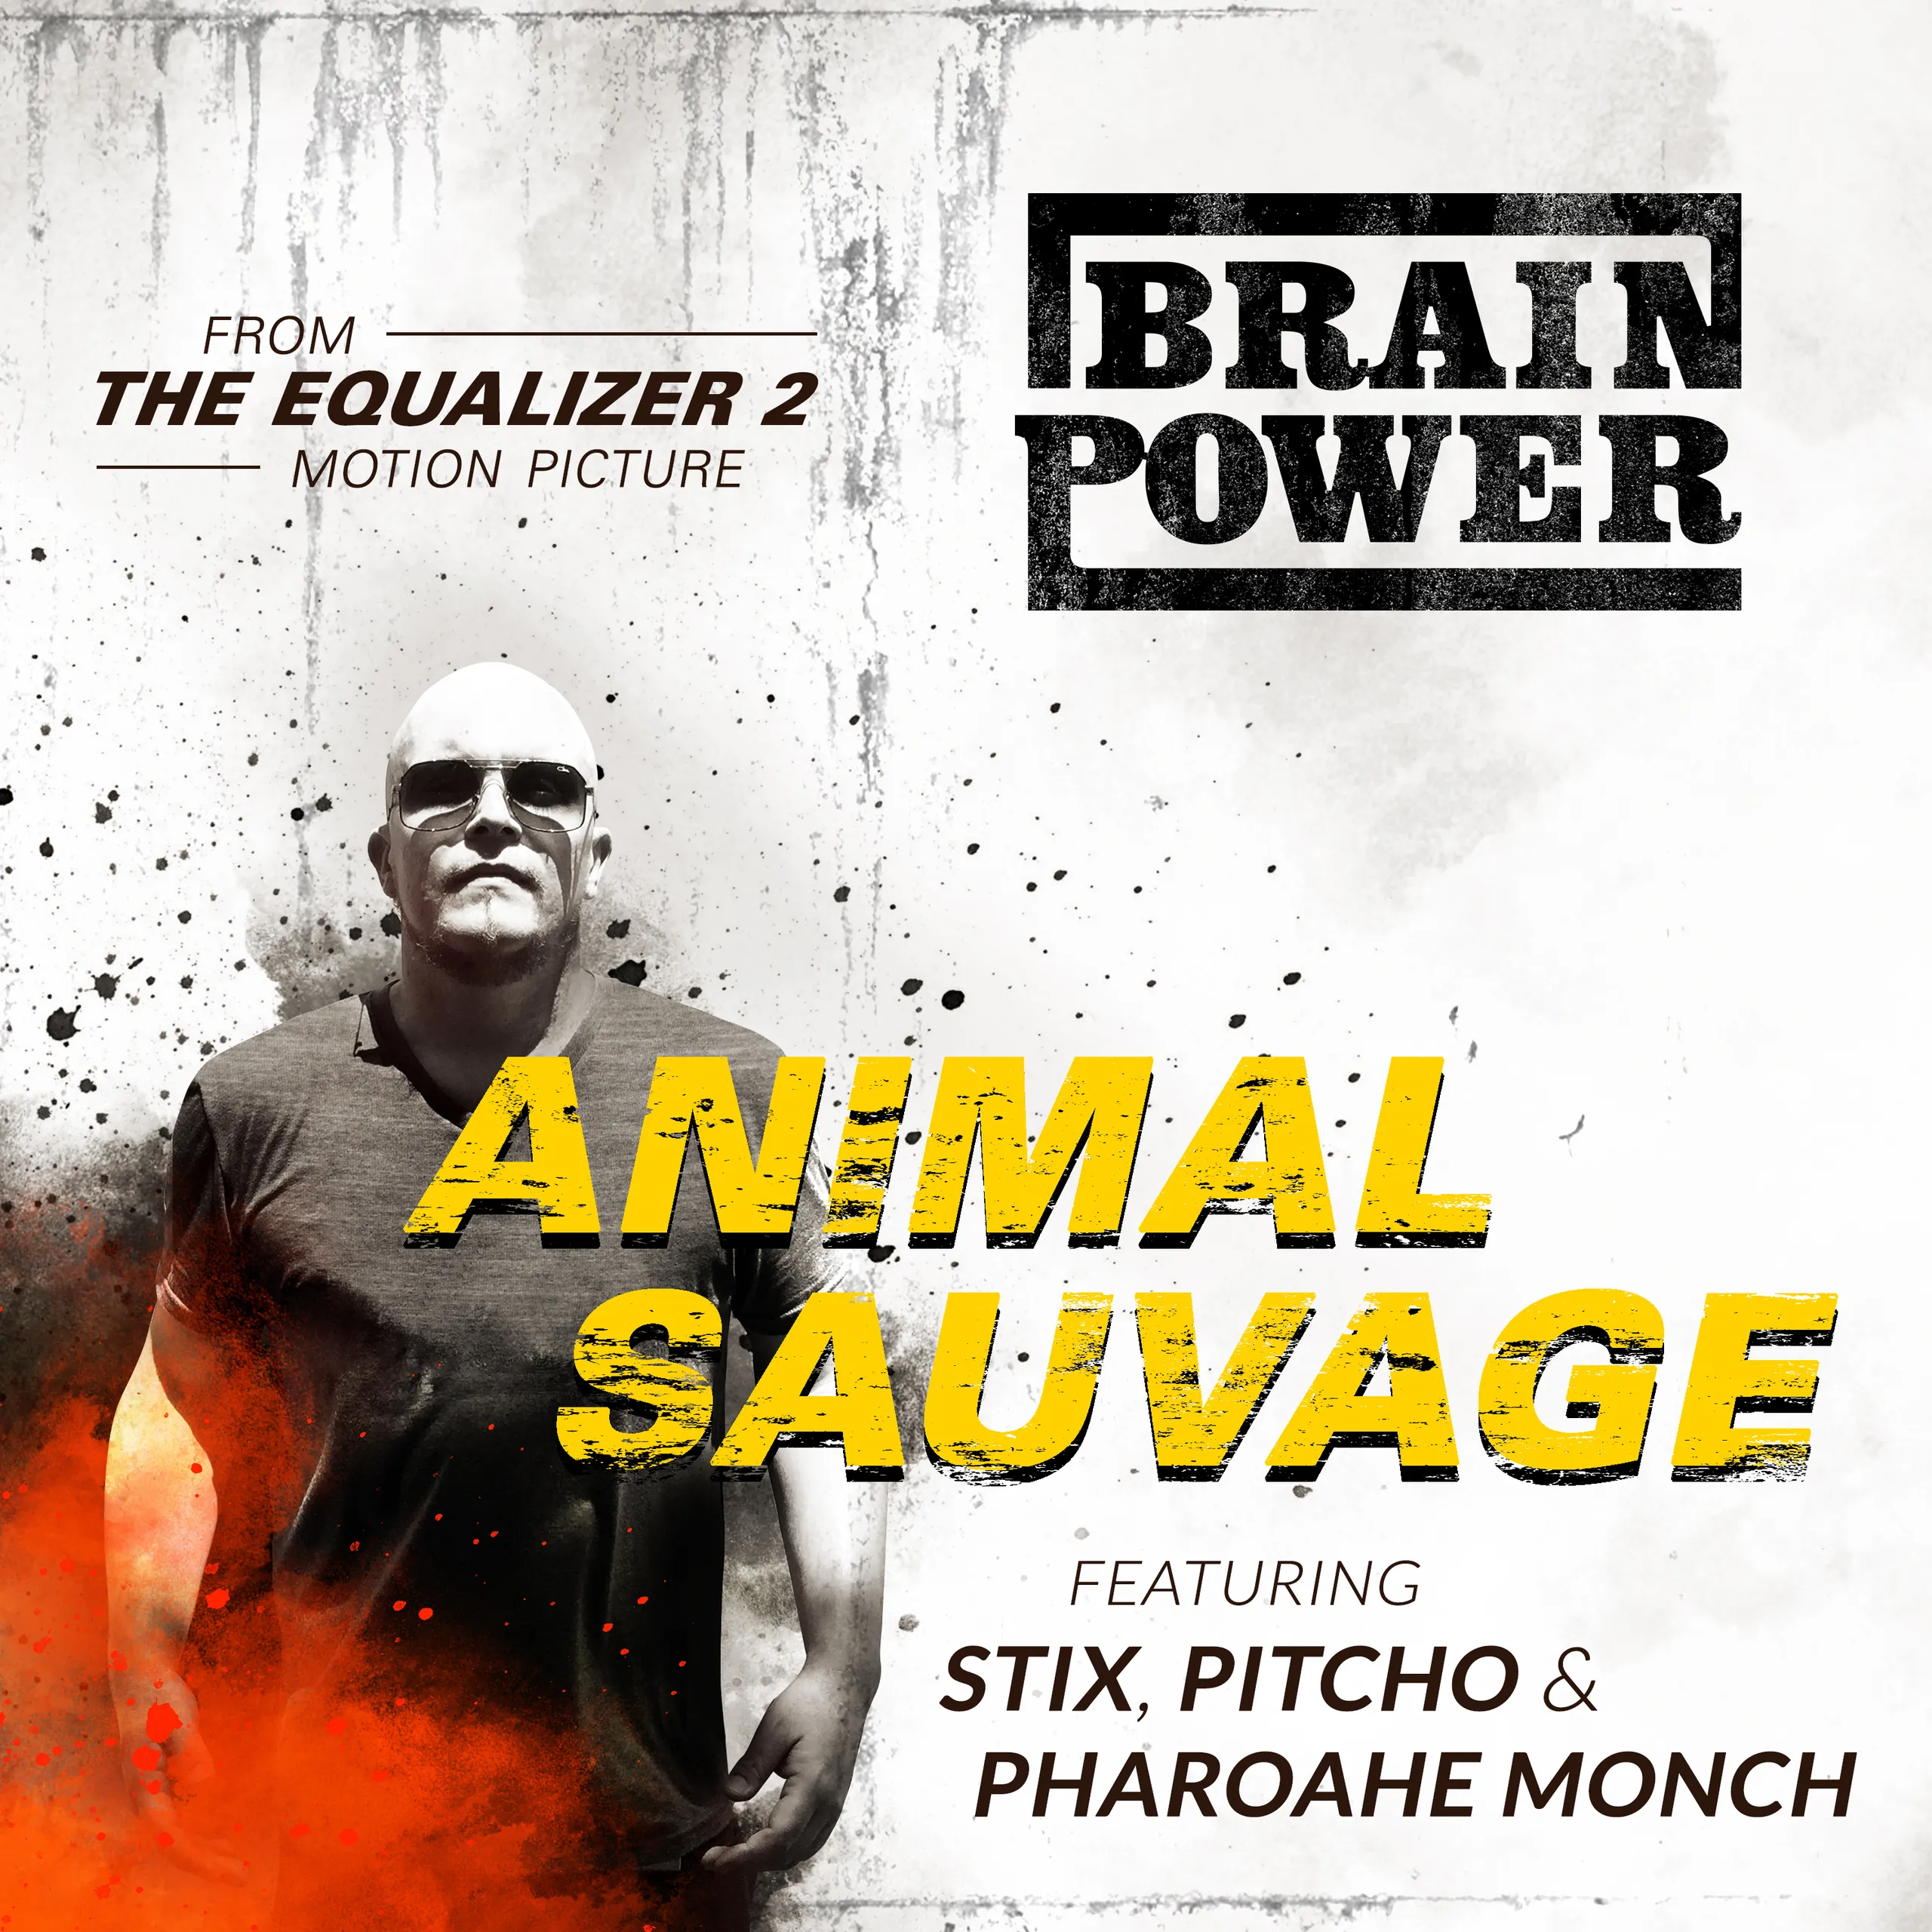 Brainpower Animal Sauvage 3000x3000 300DPI EQ2 byJelleSmid